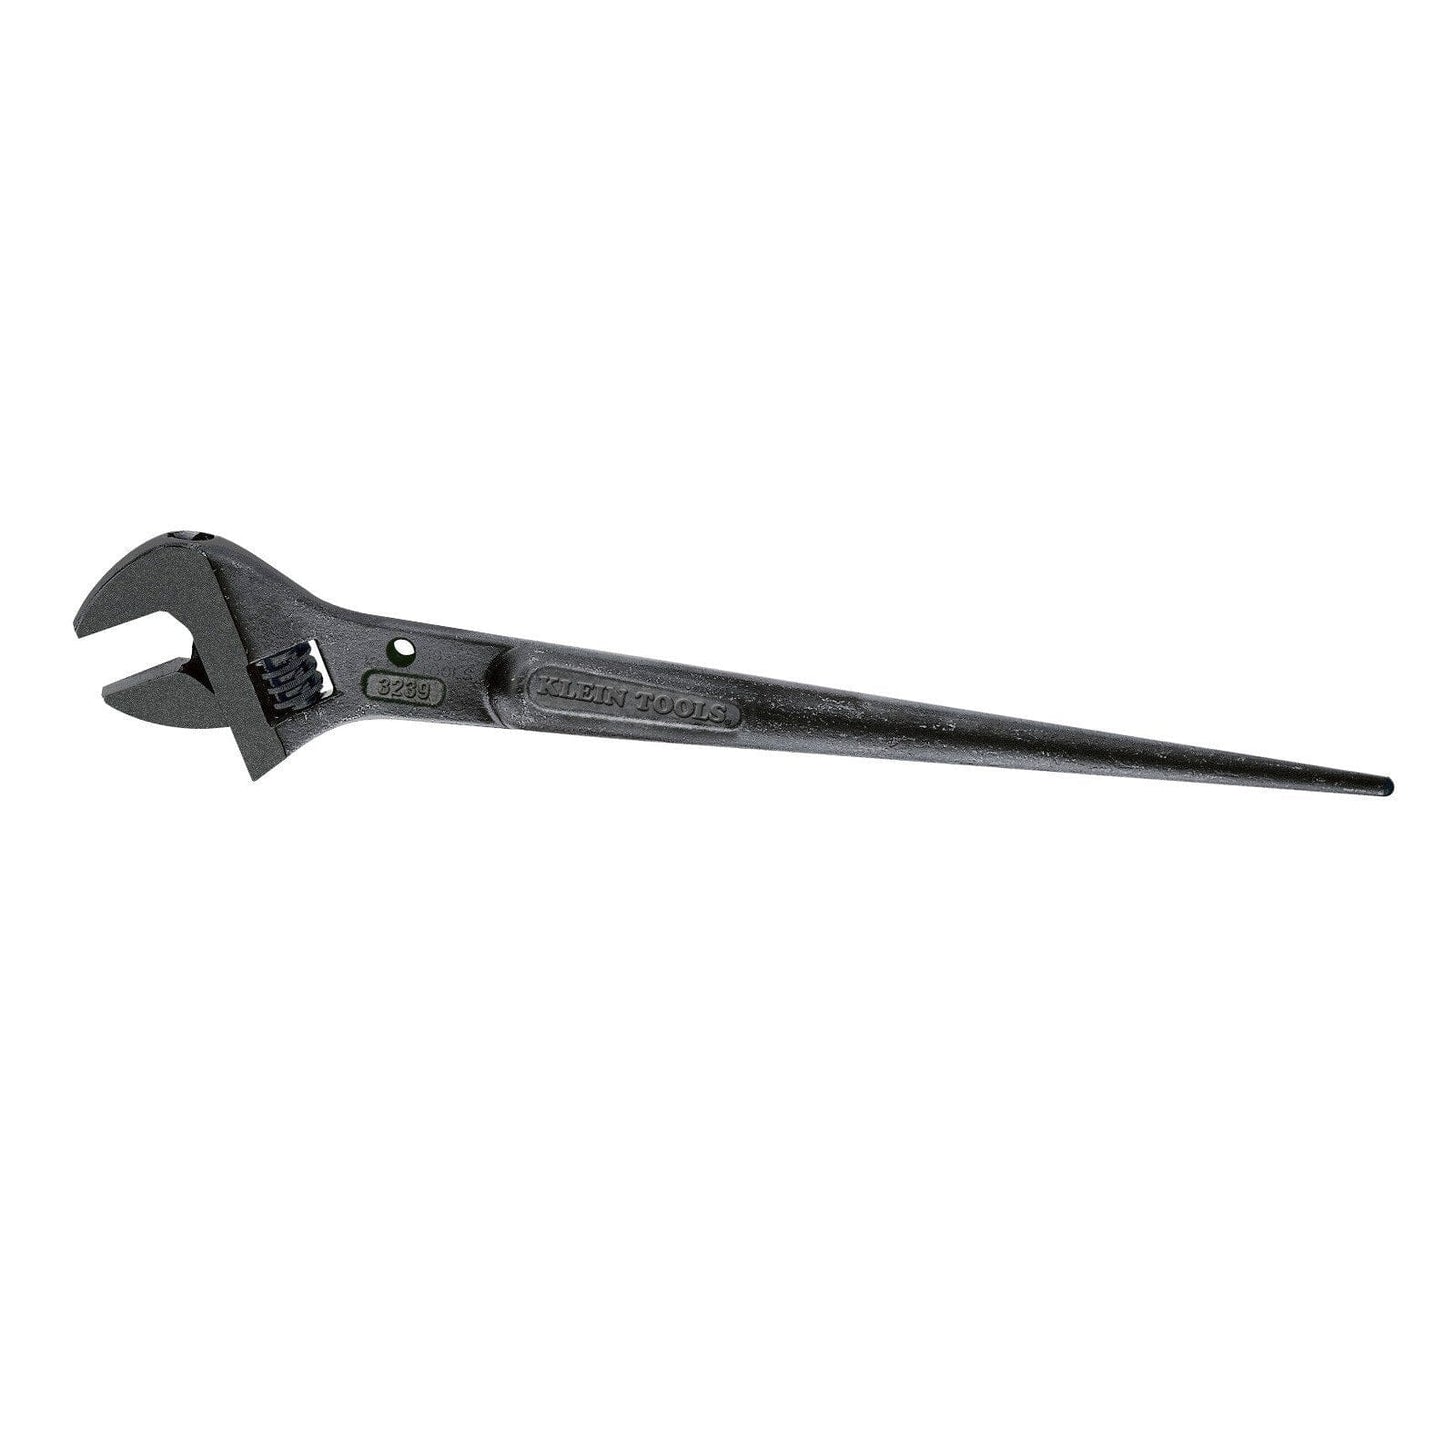 Klein Adjustable-Head Construction Wrench - 3239